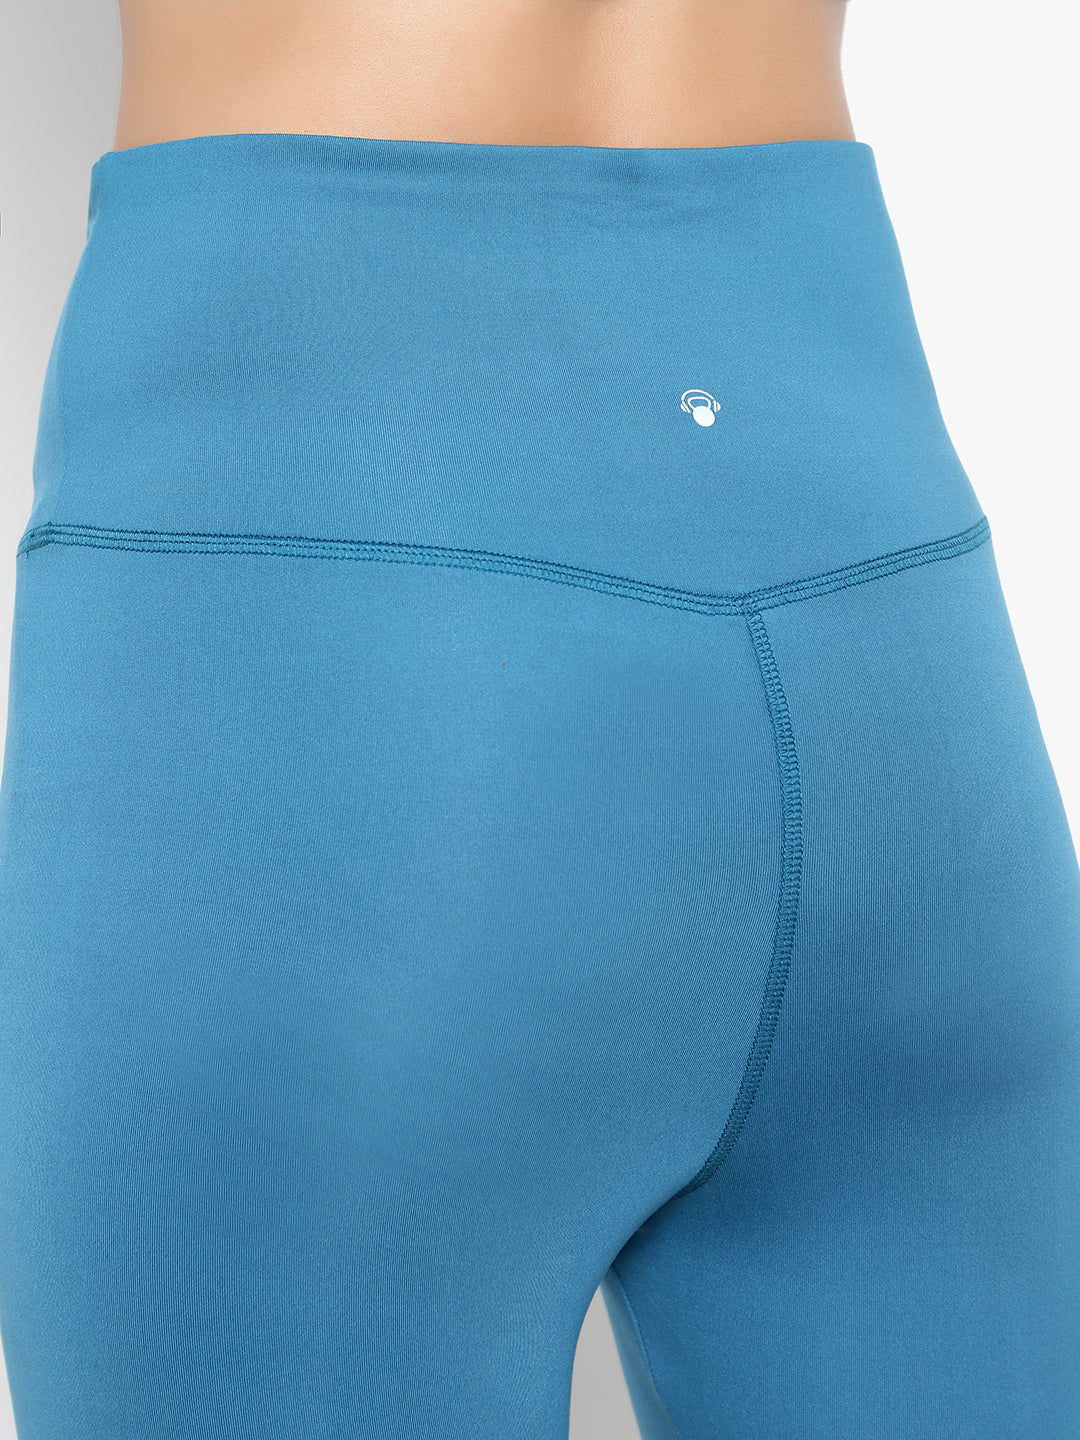 Easy Breezy Shorts - Blue